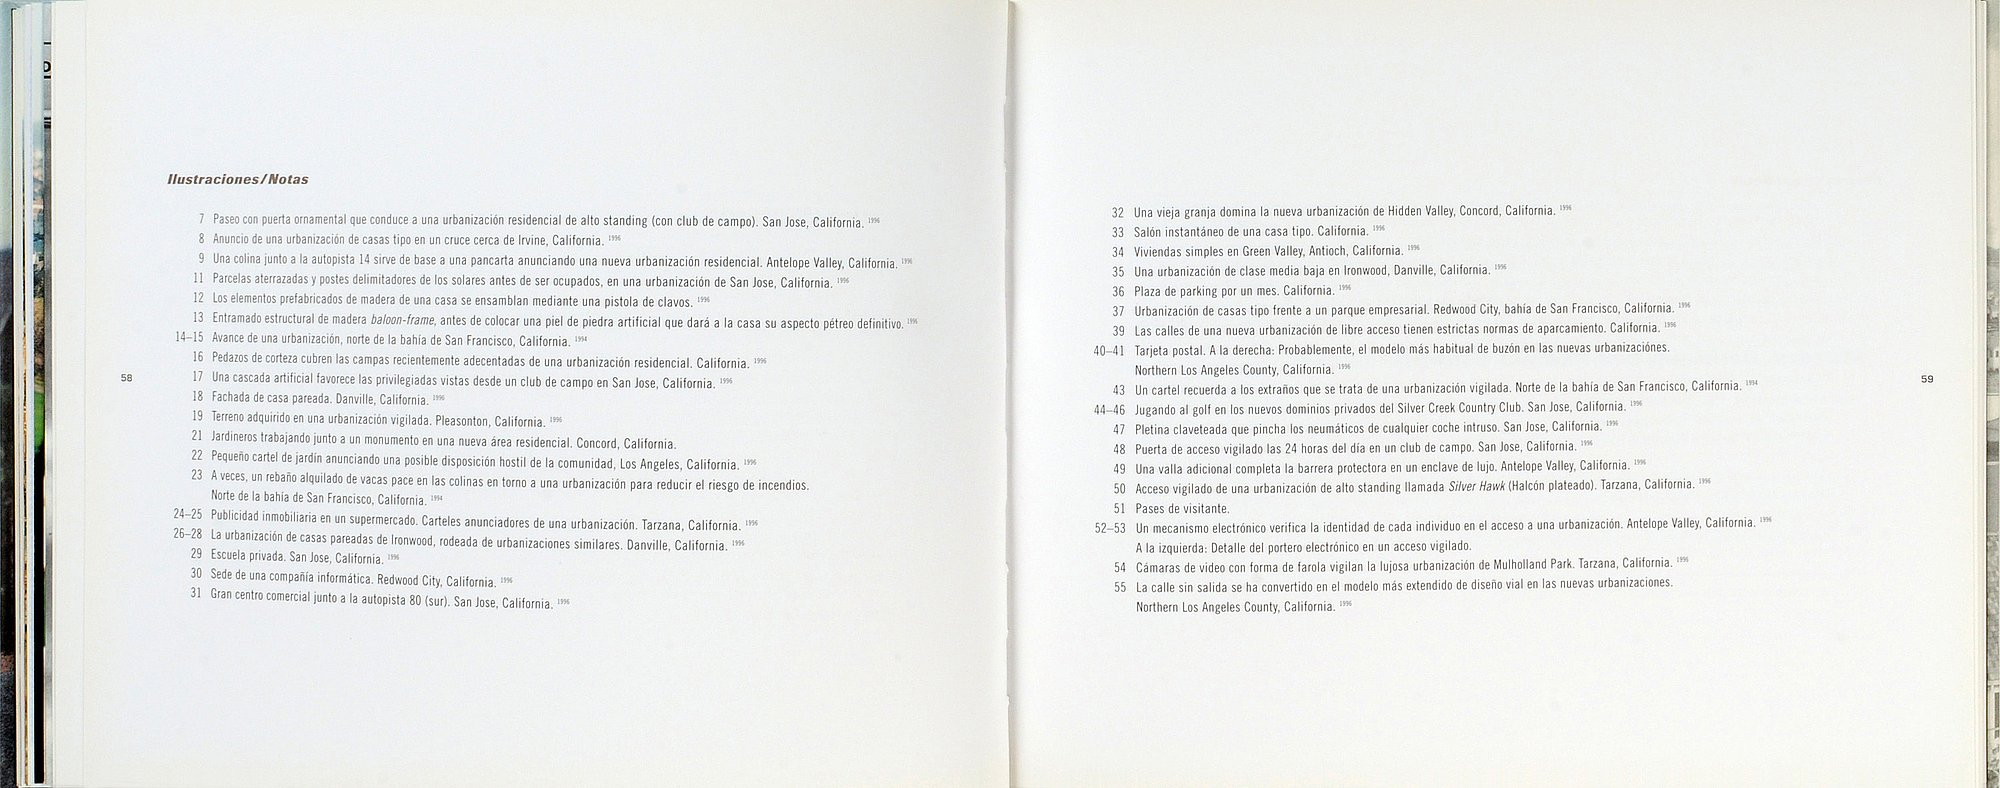 Scanscape. Marc Räder. 1999 Actar Publishers. Barcelona ISBN : 84-89698-66-X